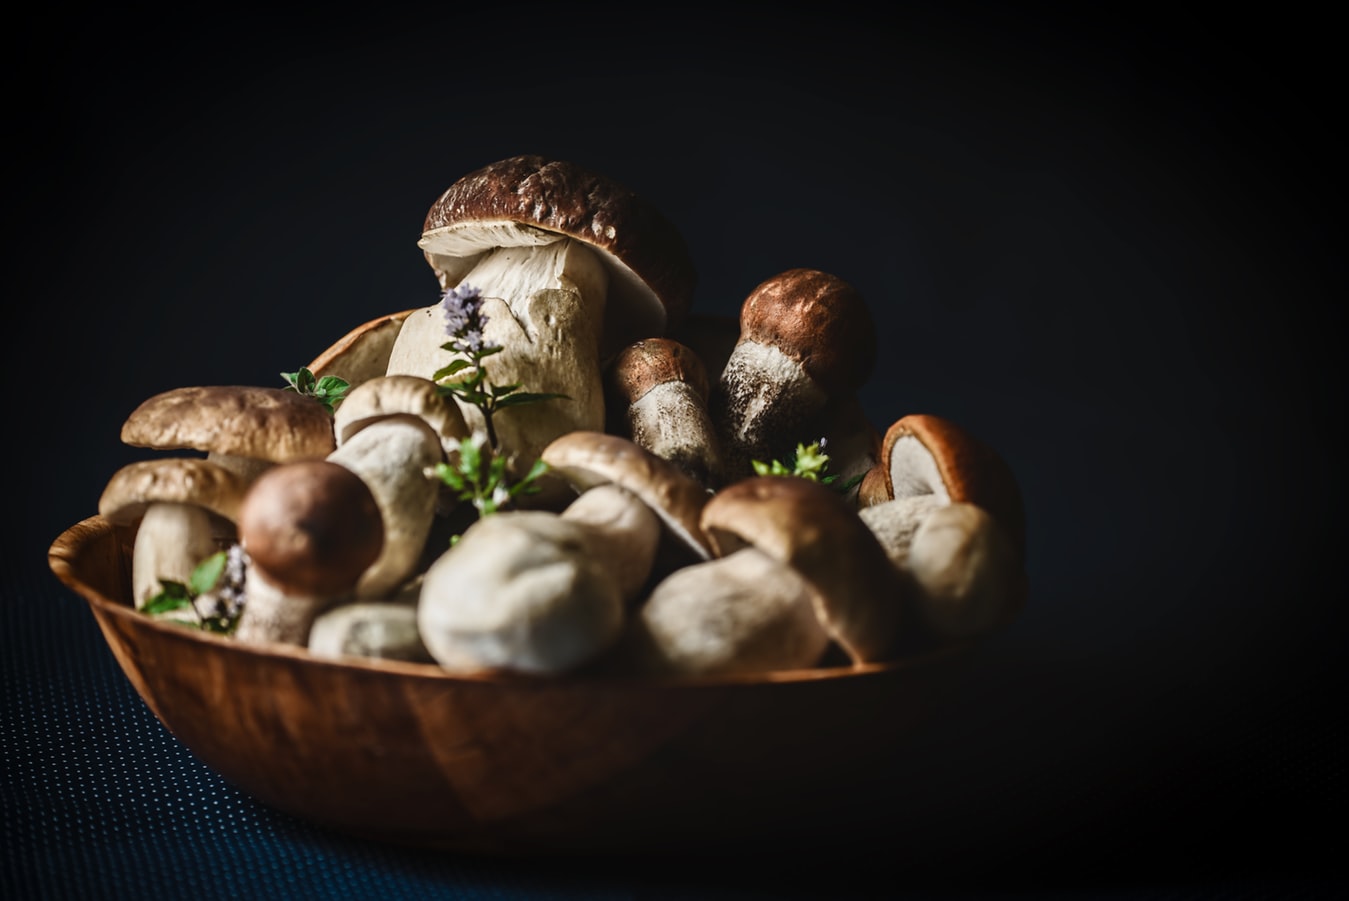 sēnes sēņu recepte ātra recepte rudens recepte грибы рецепт грибной суп recipe recipes mushroom mushrooms (4).jpg